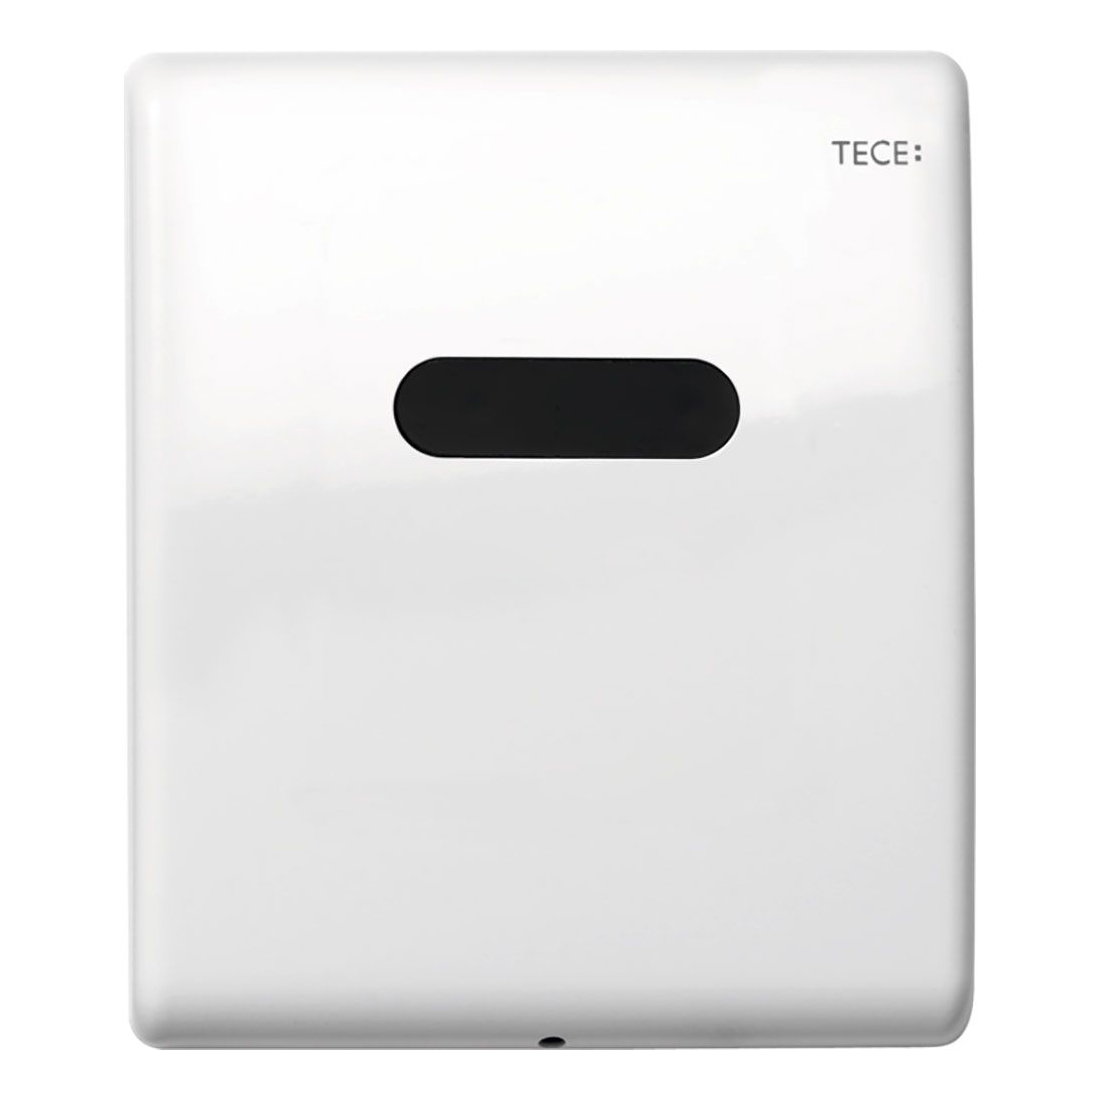 Кнопка для инсталляции Tece TECEplanus Urinal 9242356, 6 V батарея, белая глянцевая кнопка для инсталляции tece teceplanus urinal 9242351 6 v батарея хром глянцевый